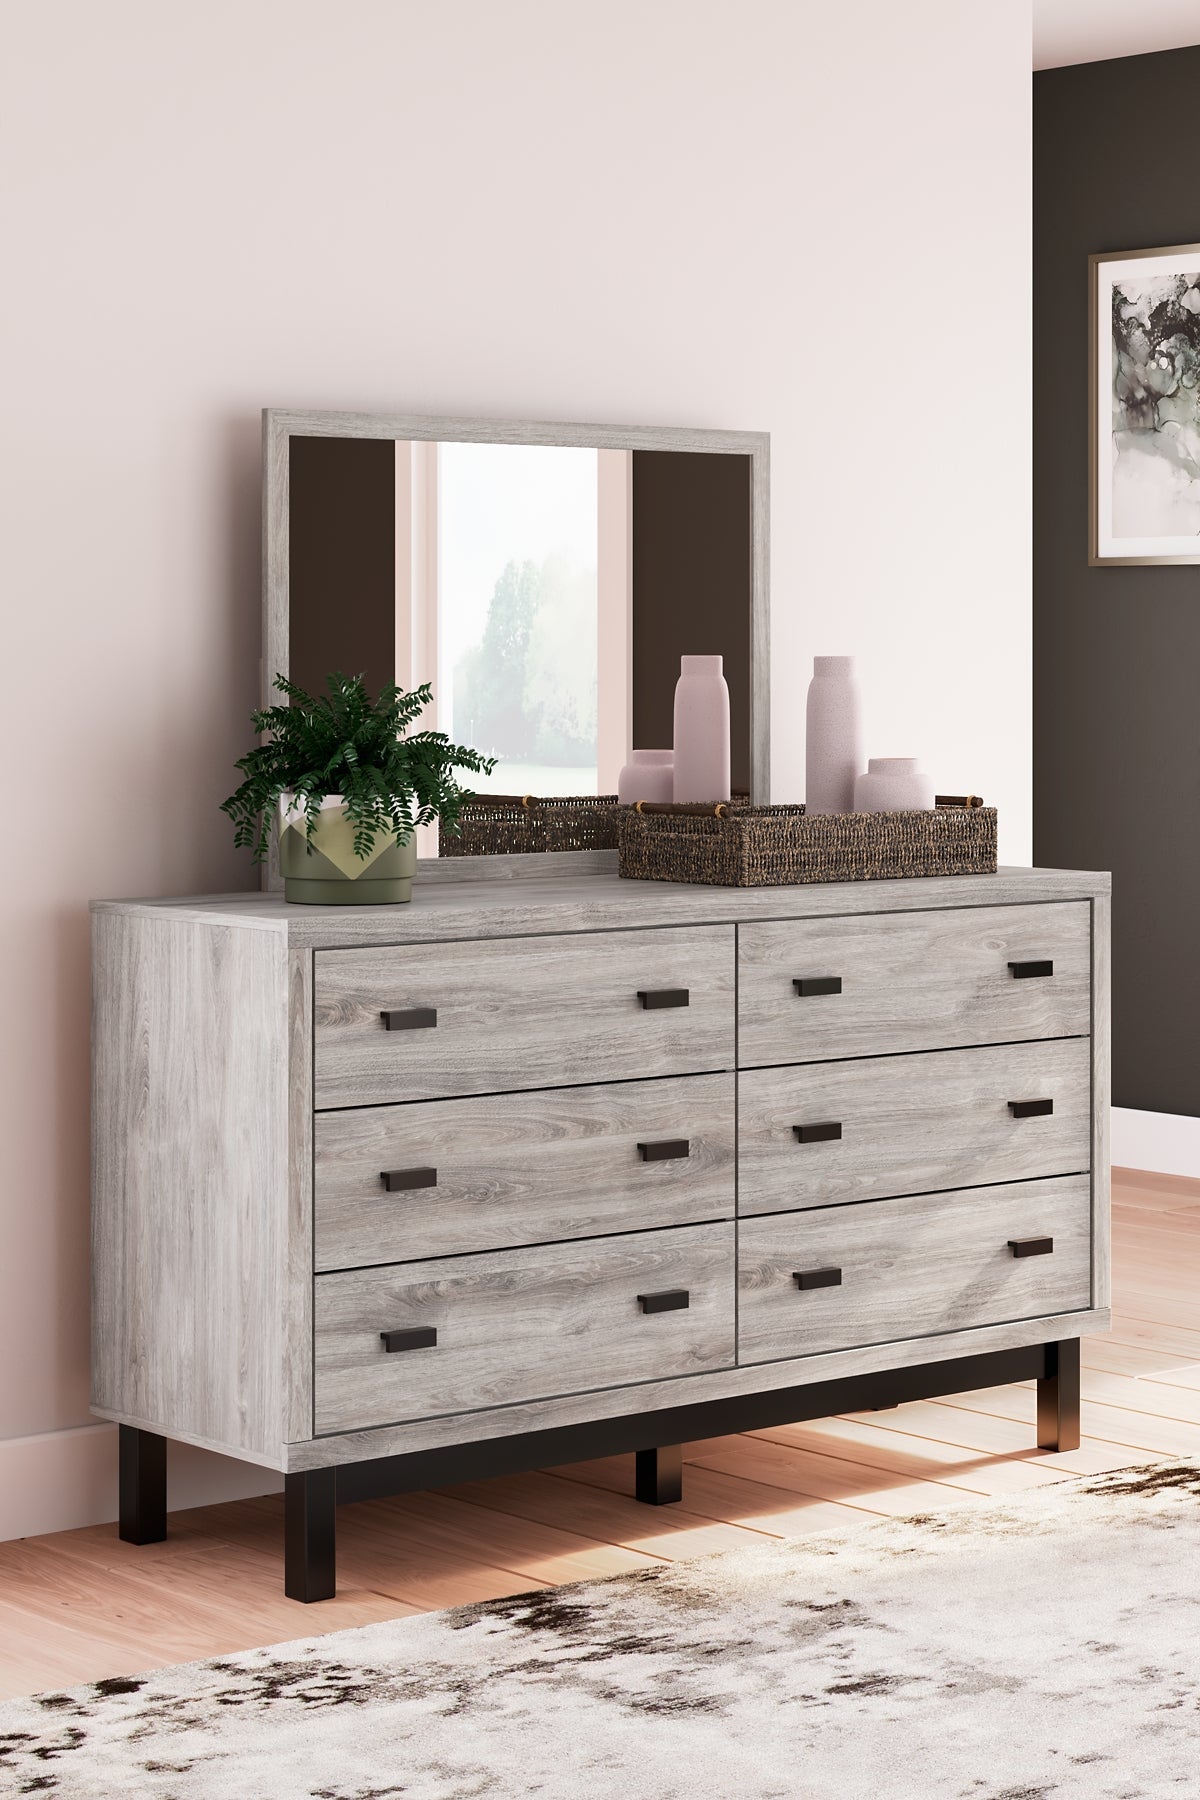 Vessalli Queen Panel Headboard with Mirrored Dresser at Cloud 9 Mattress & Furniture furniture, home furnishing, home decor